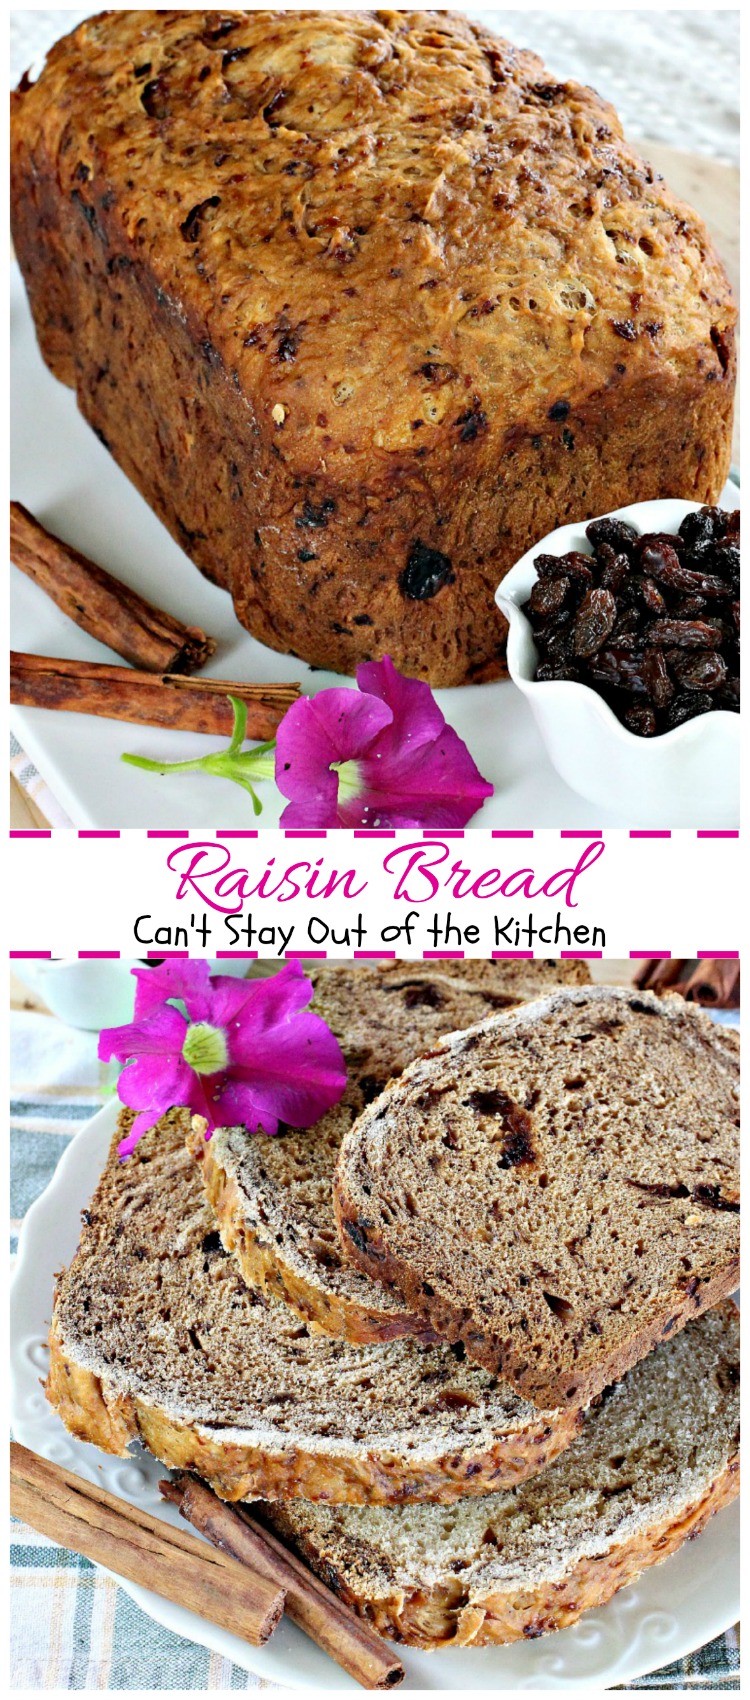 What is an easy raisin bread recipe?